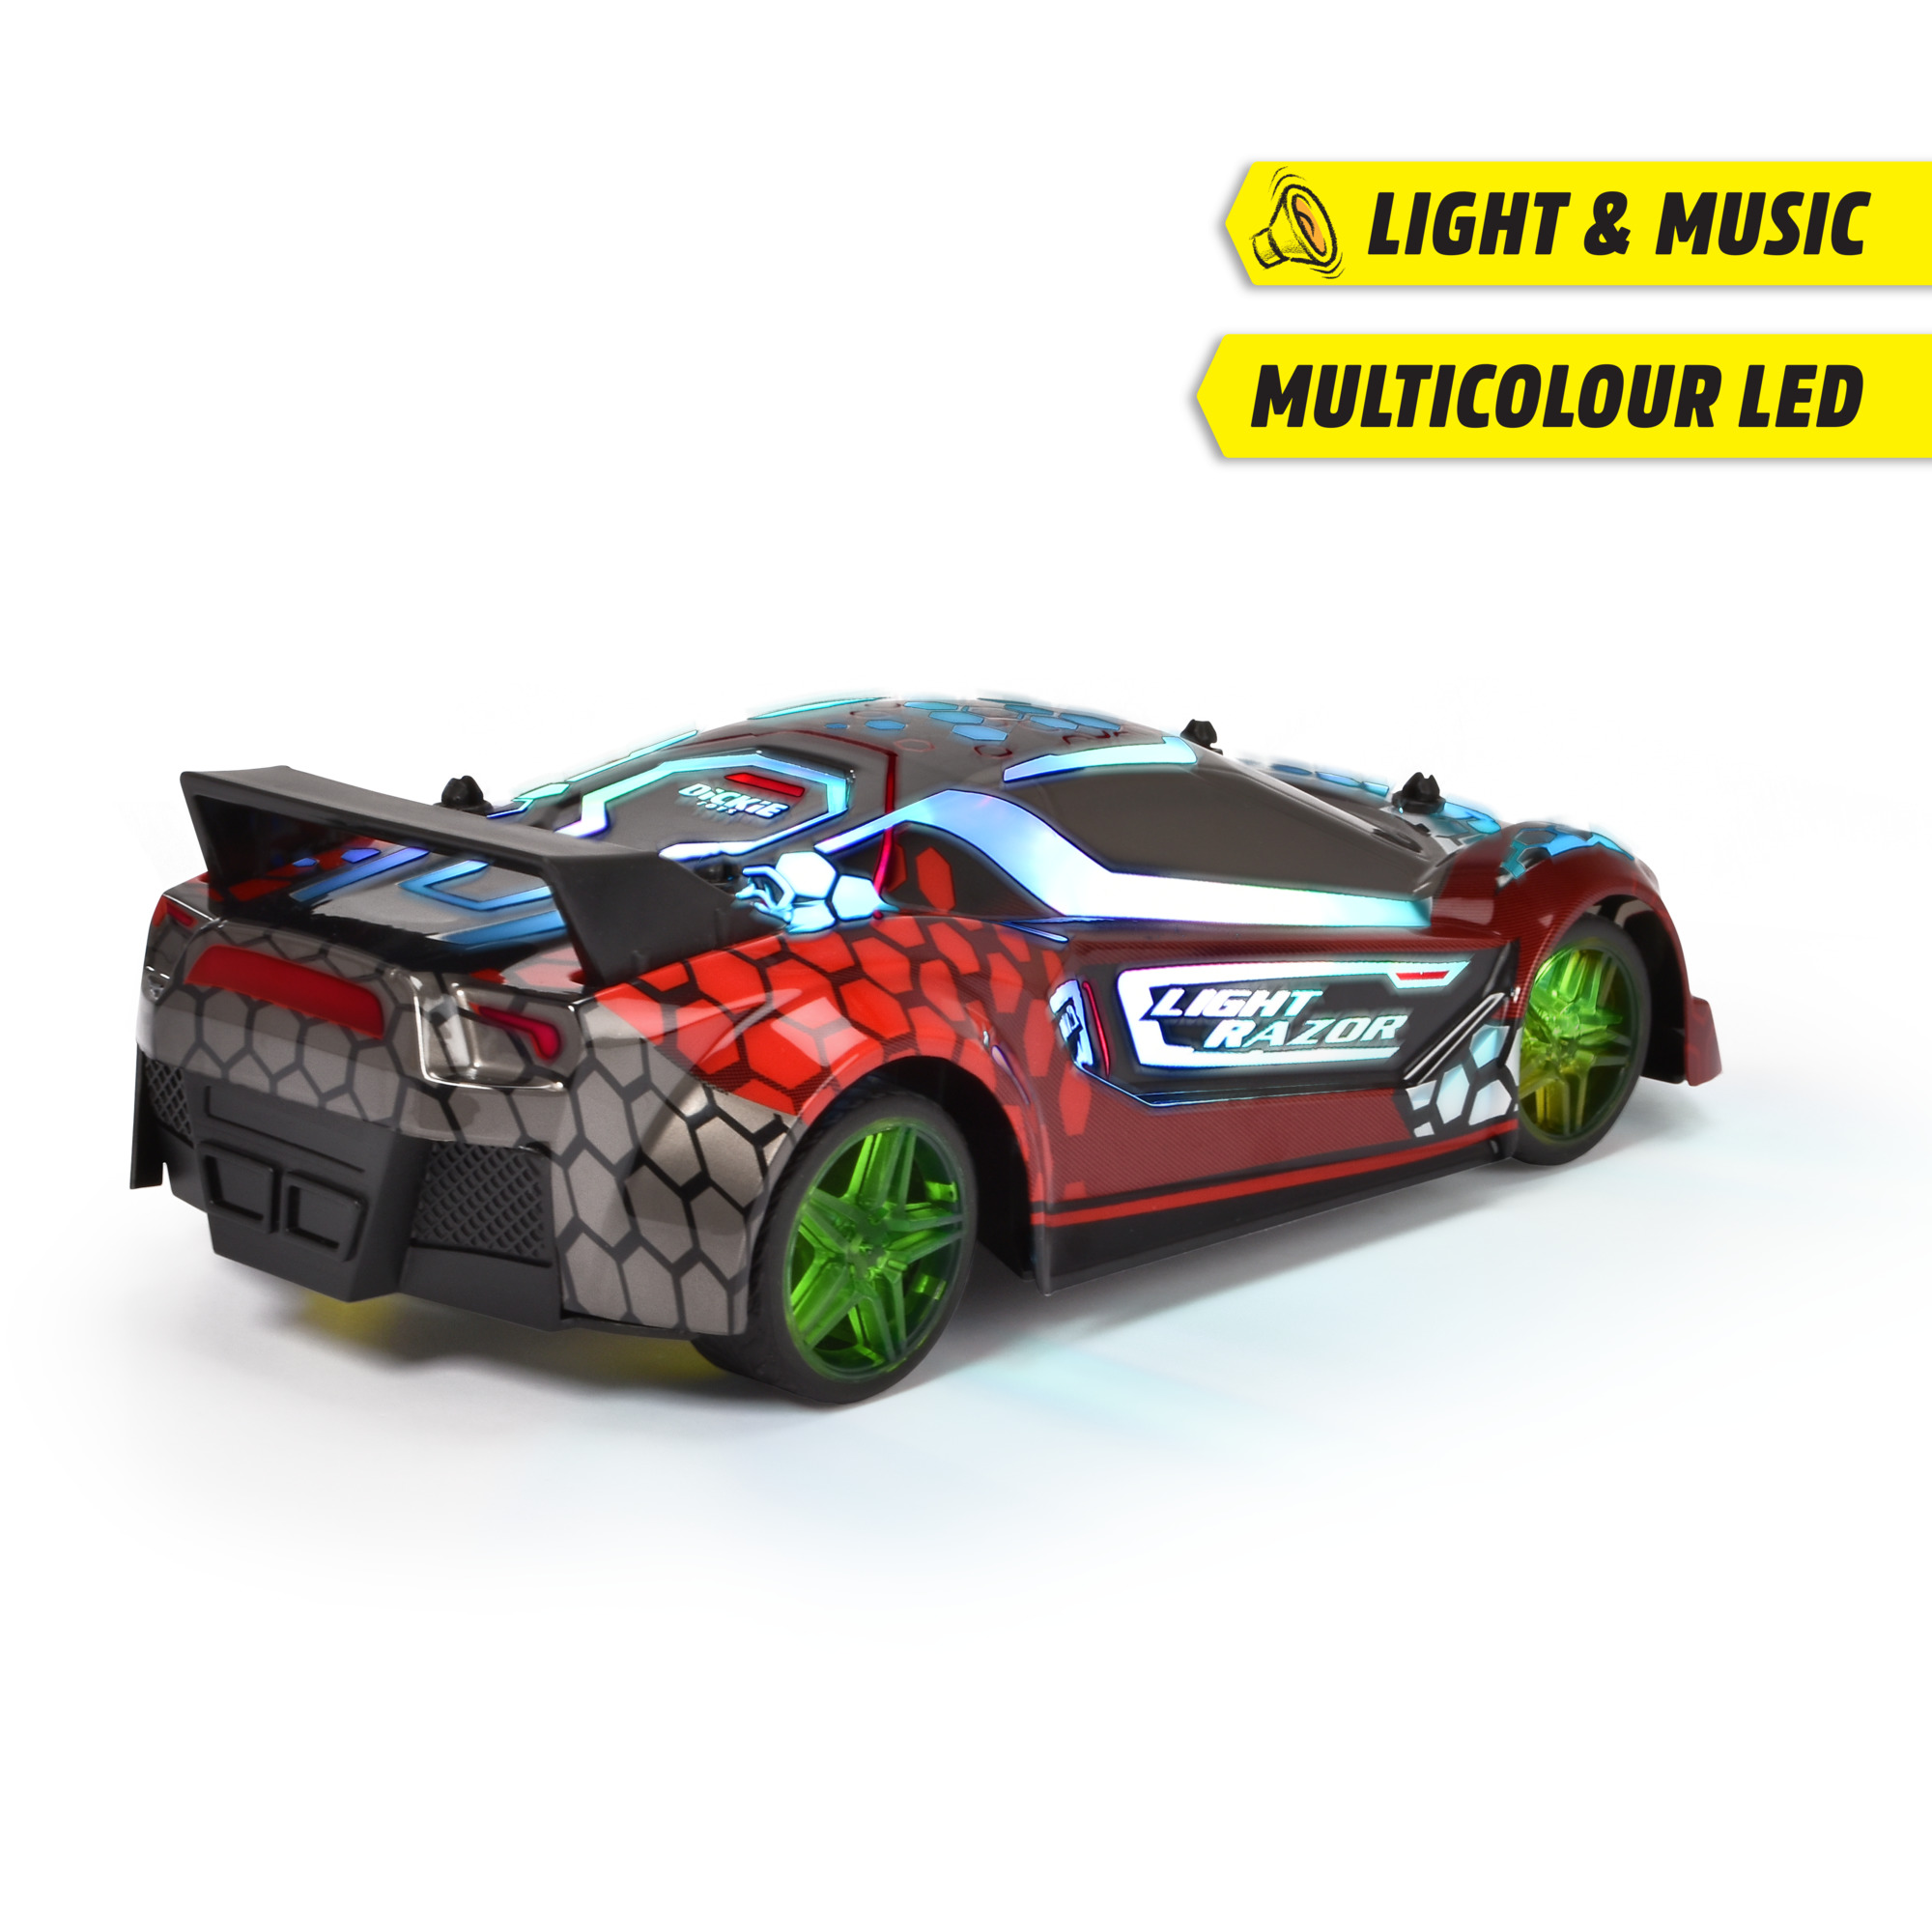 DICKIE-TOYS R/C Light Razor Mehrfarbig Spielzeugauto R/C